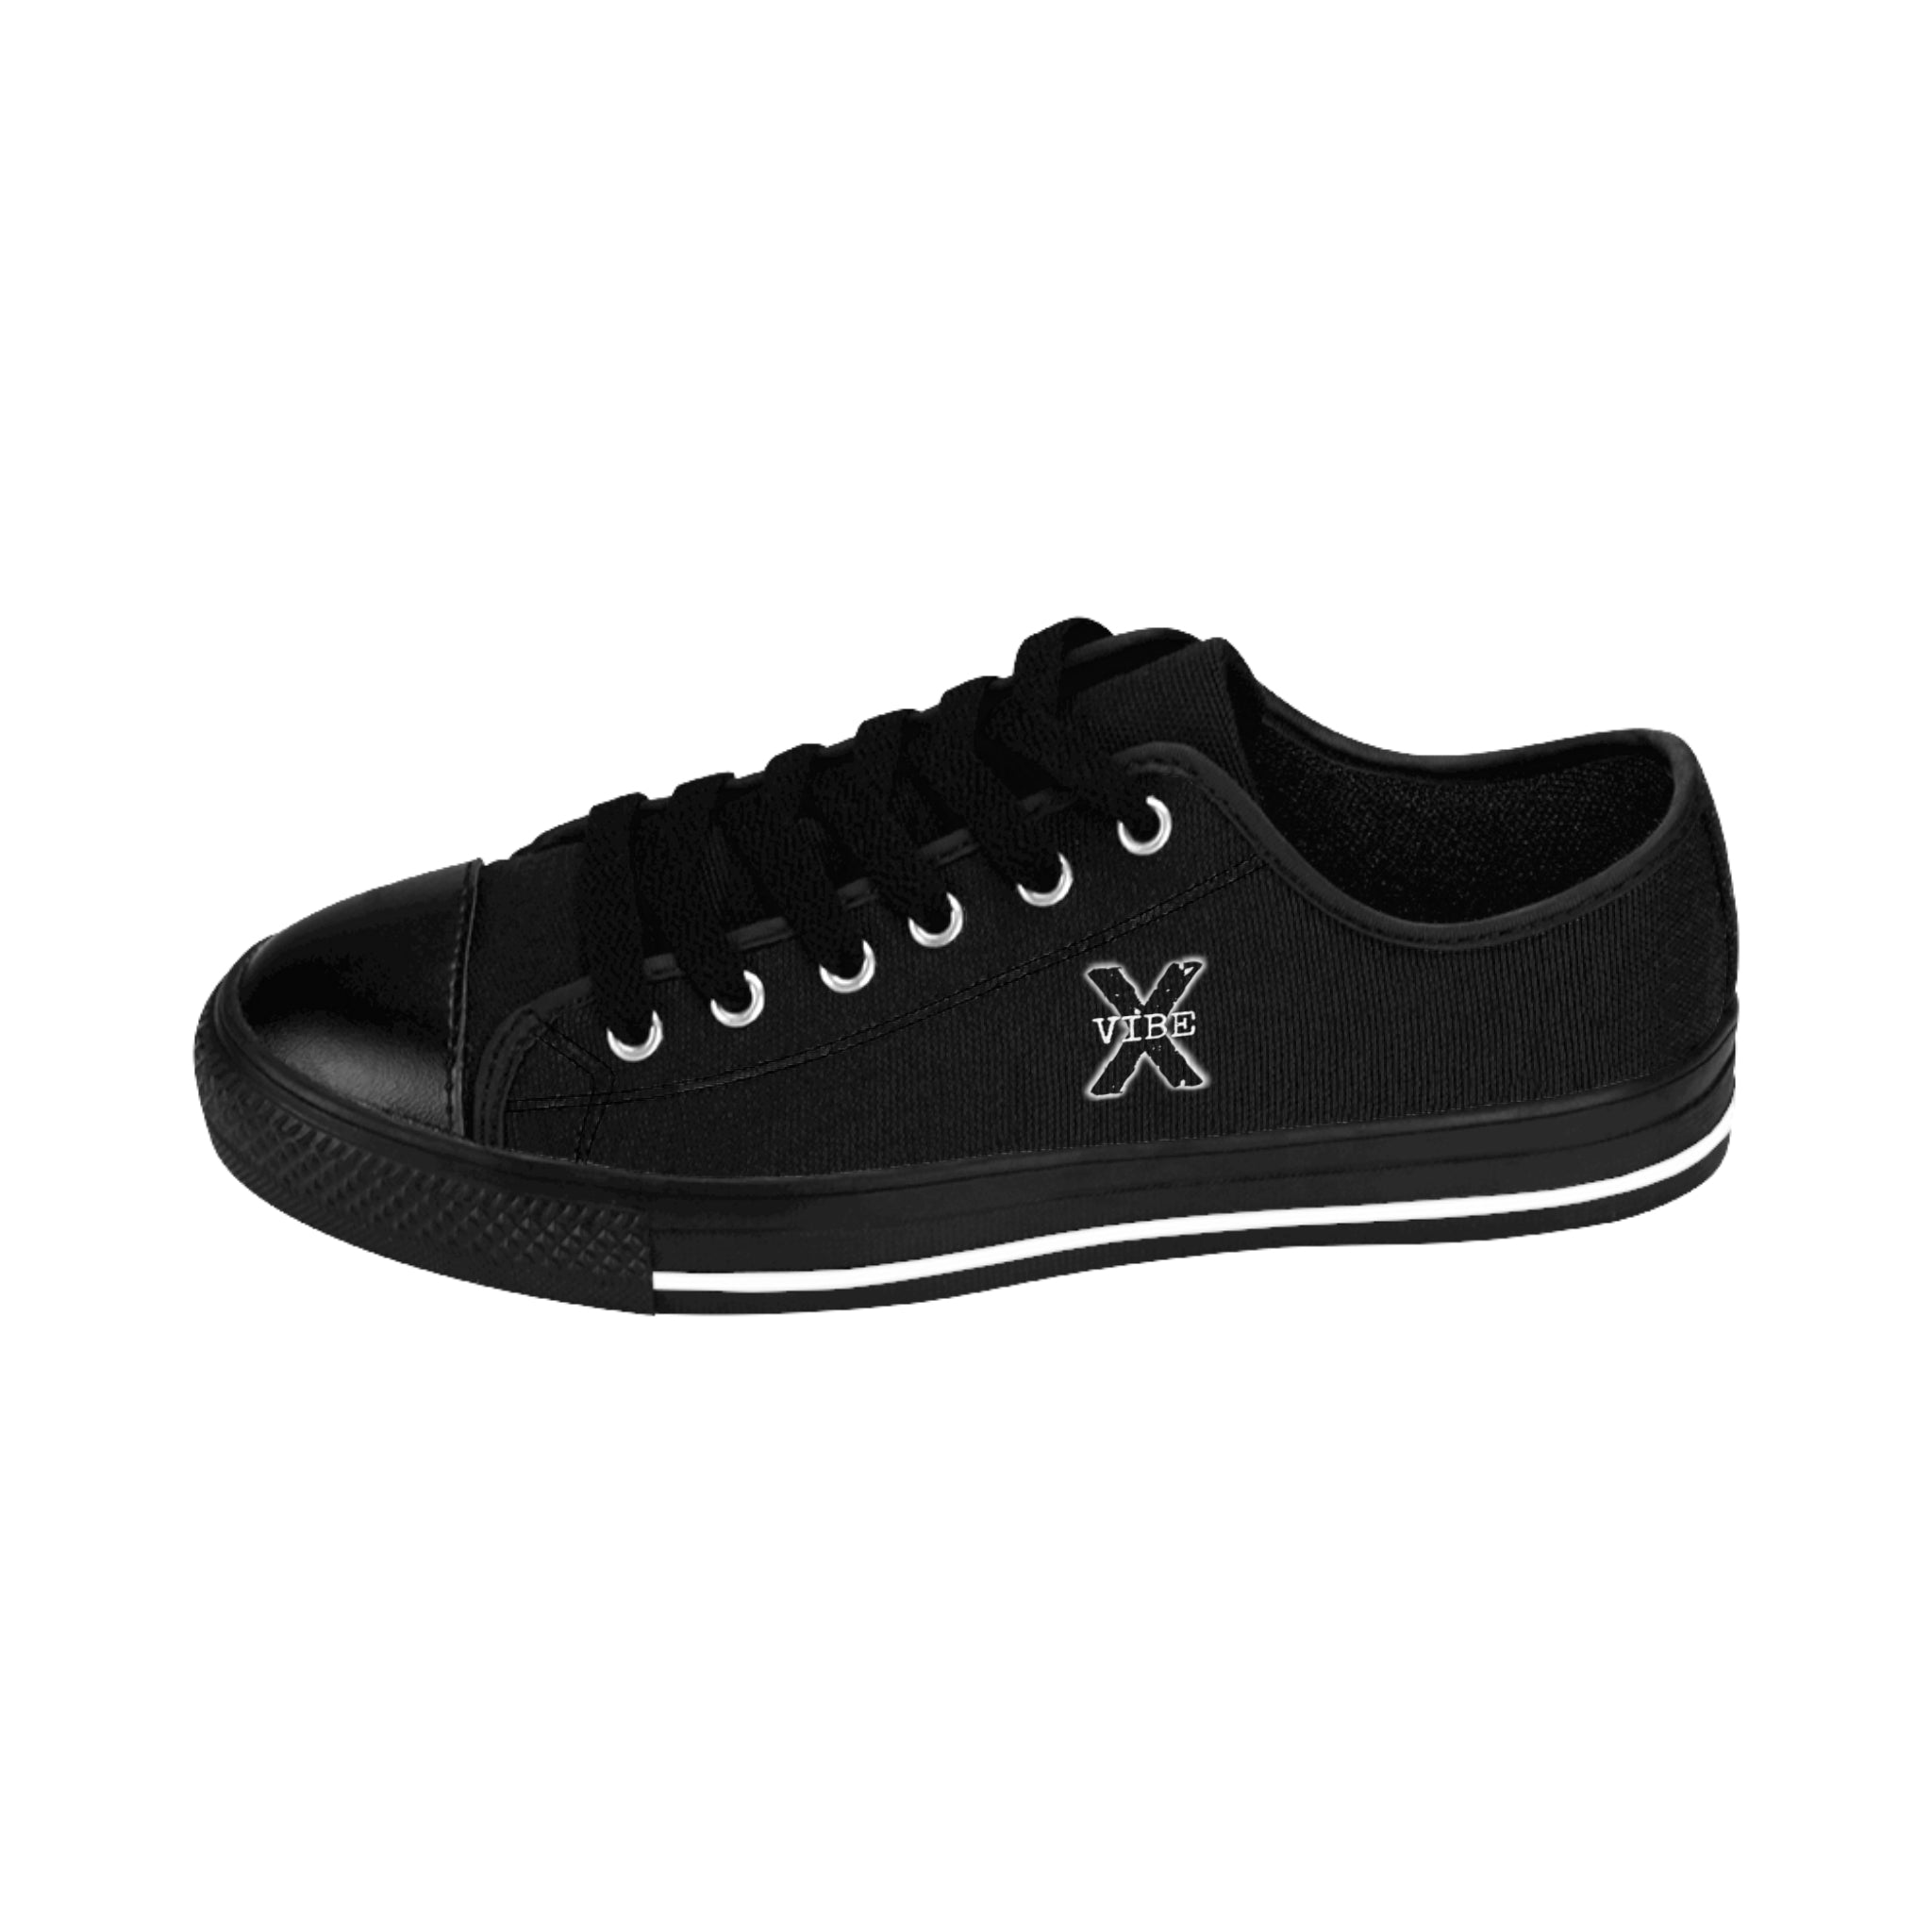 X-Vibe Women's Sneakers (Black/B)